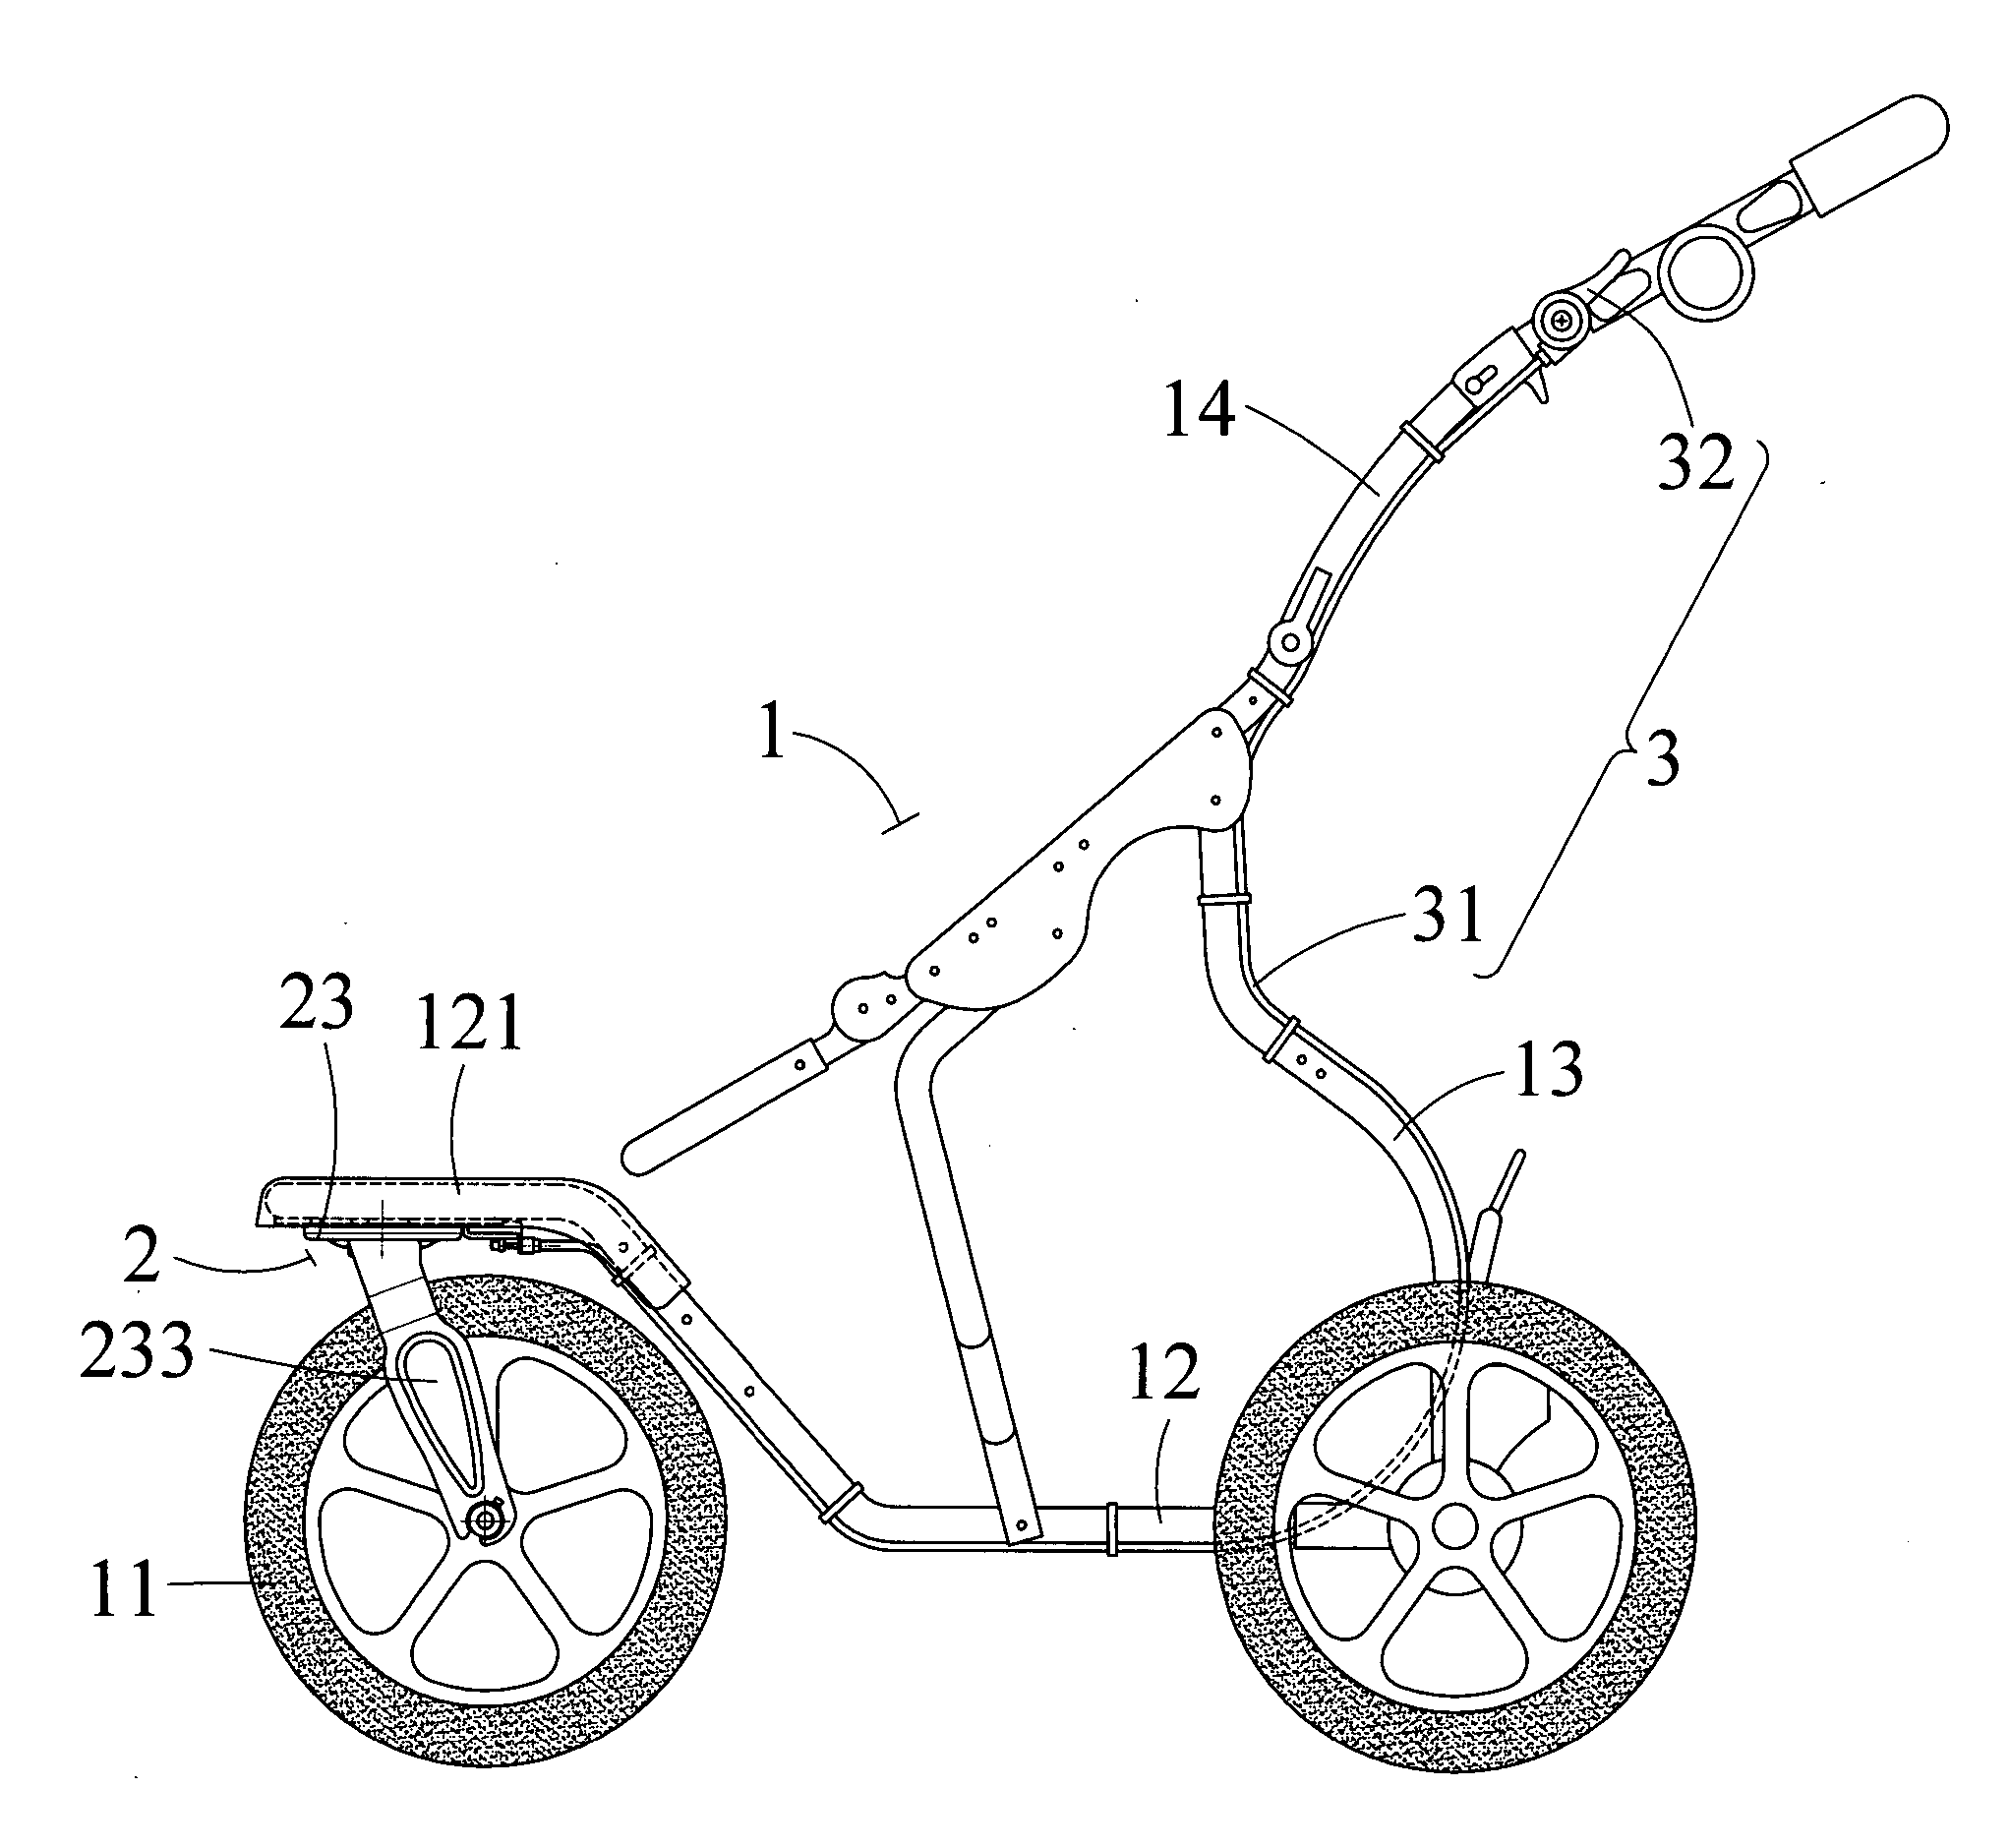 Stroller having wheel rotation control device